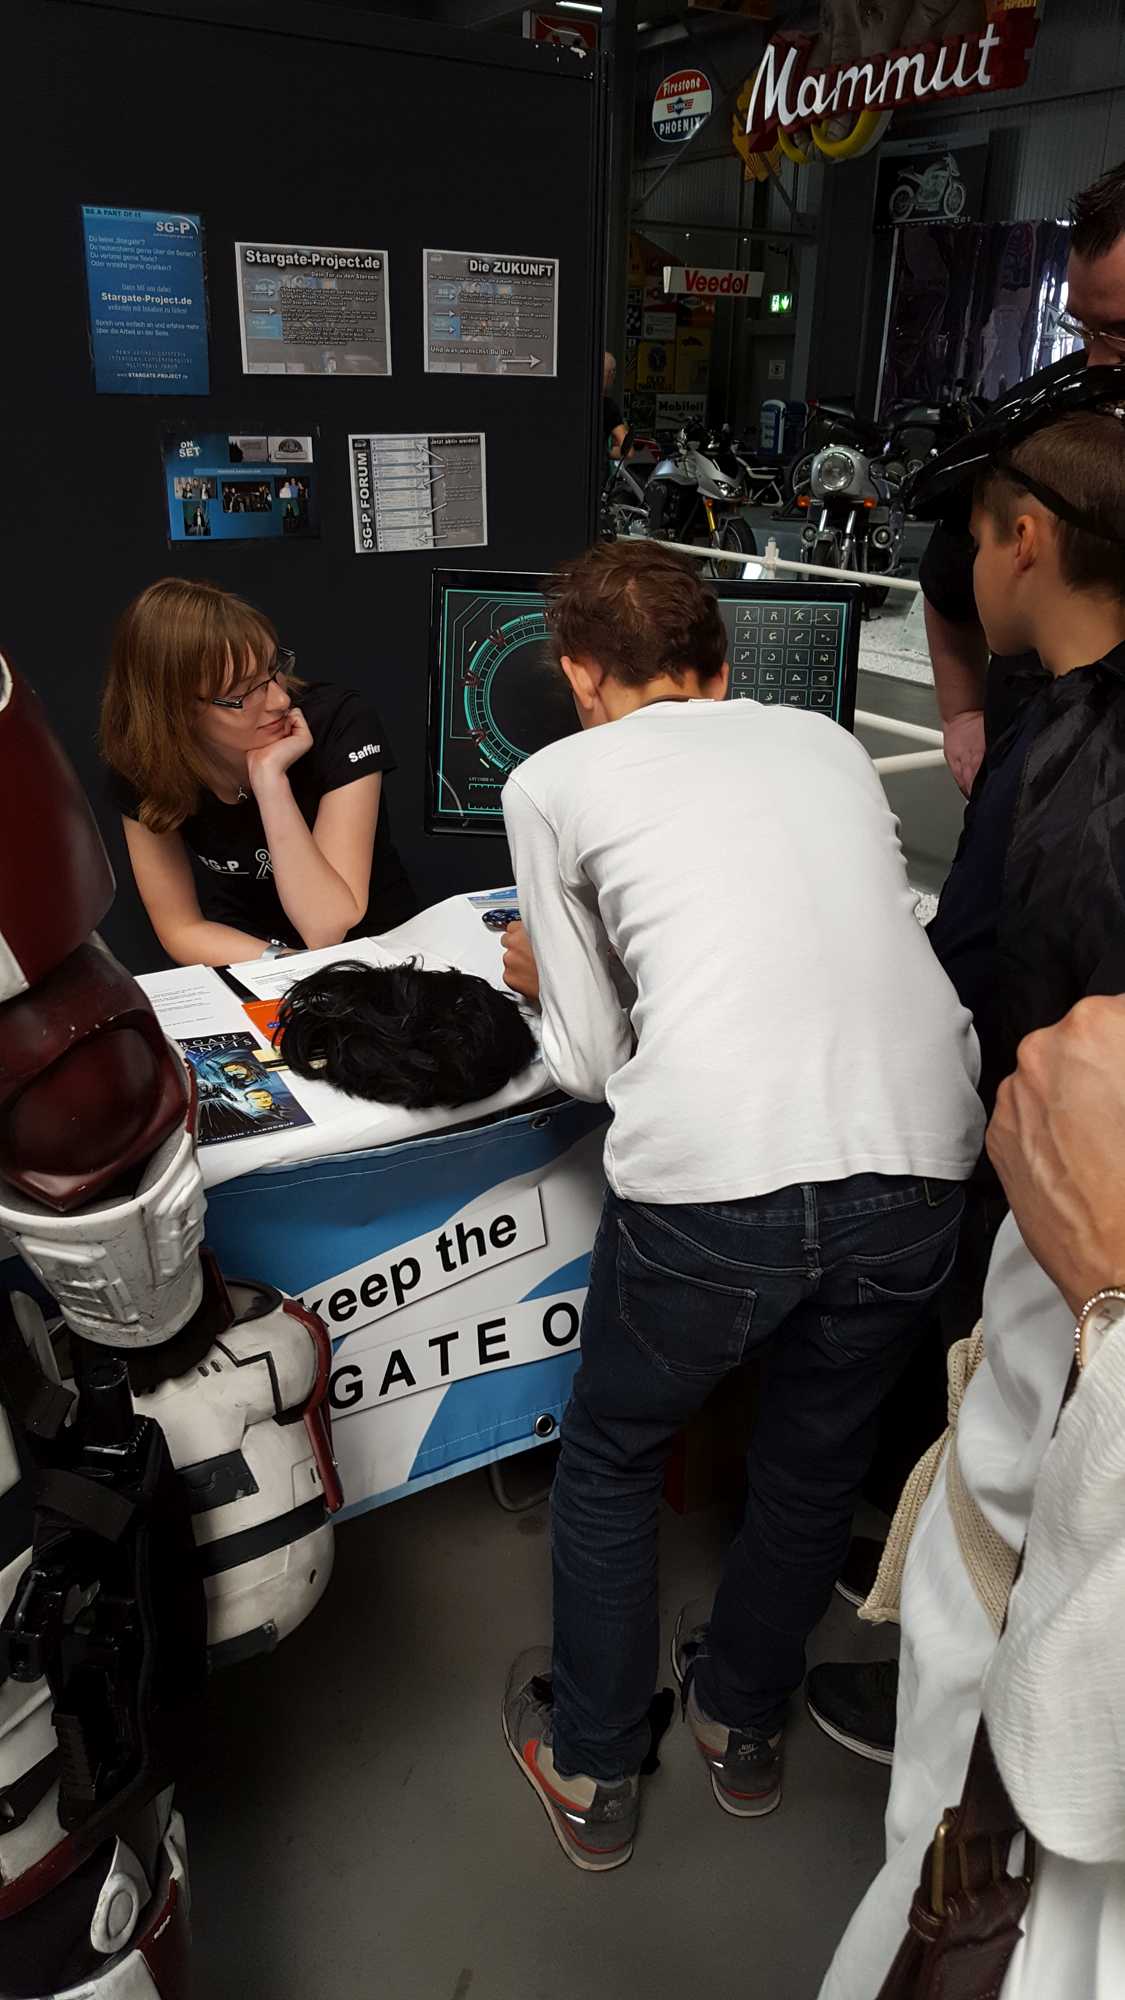 Sci-Fi-Treffen im Technikmuseum Speyer 2016 - Stargate-Project Stand - DHD - 2